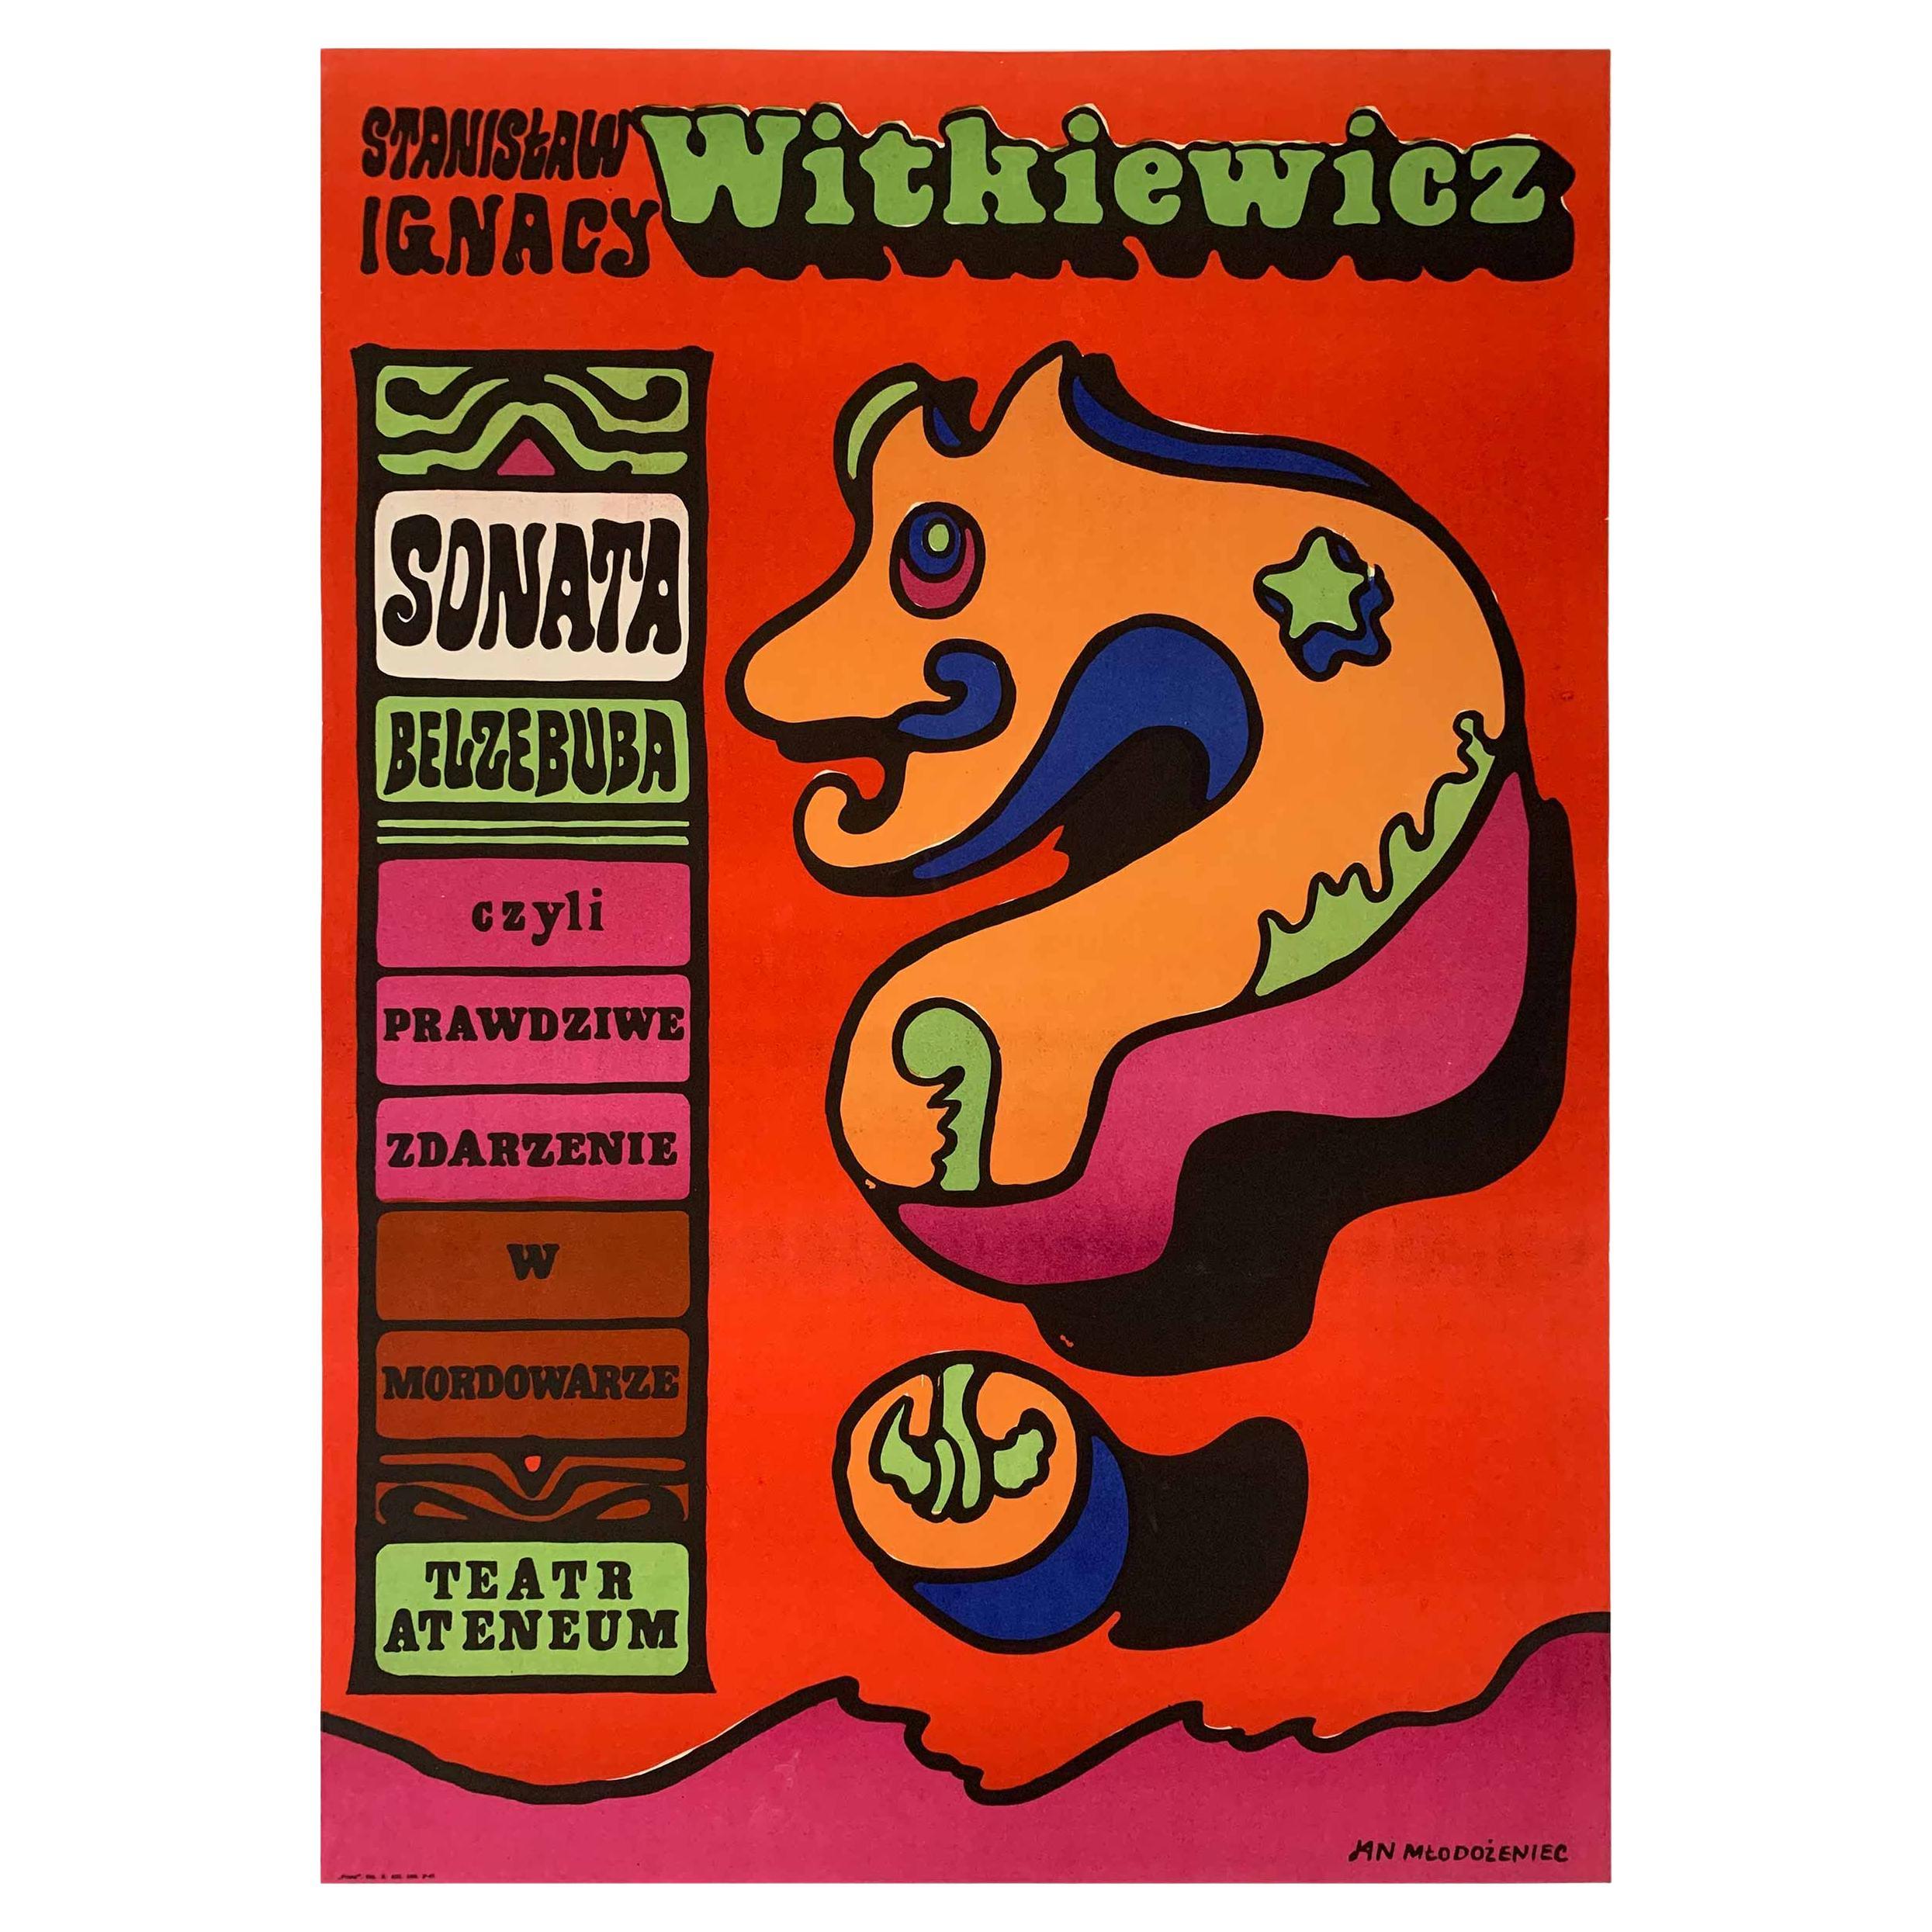 Sonata Belzebuba, Antiguo cartel de teatro polaco de Jan Mlodozeniec, 1969